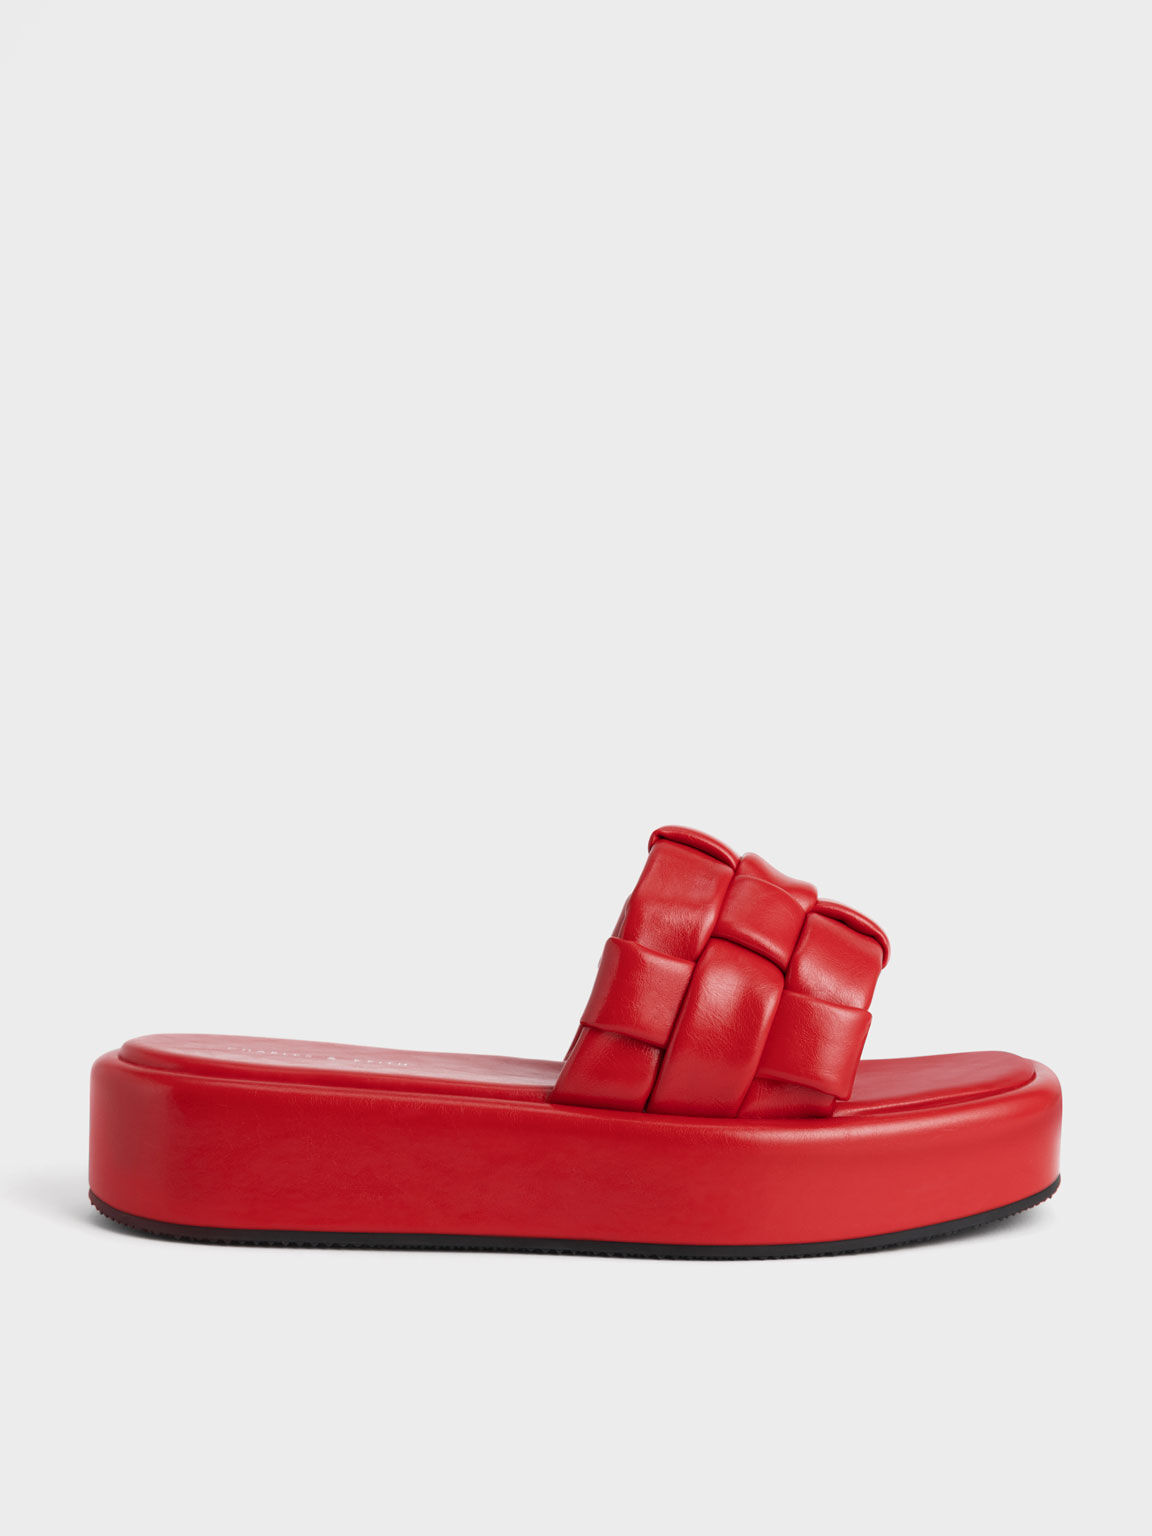 Interwoven Strap Platform Sandals, Red, hi-res